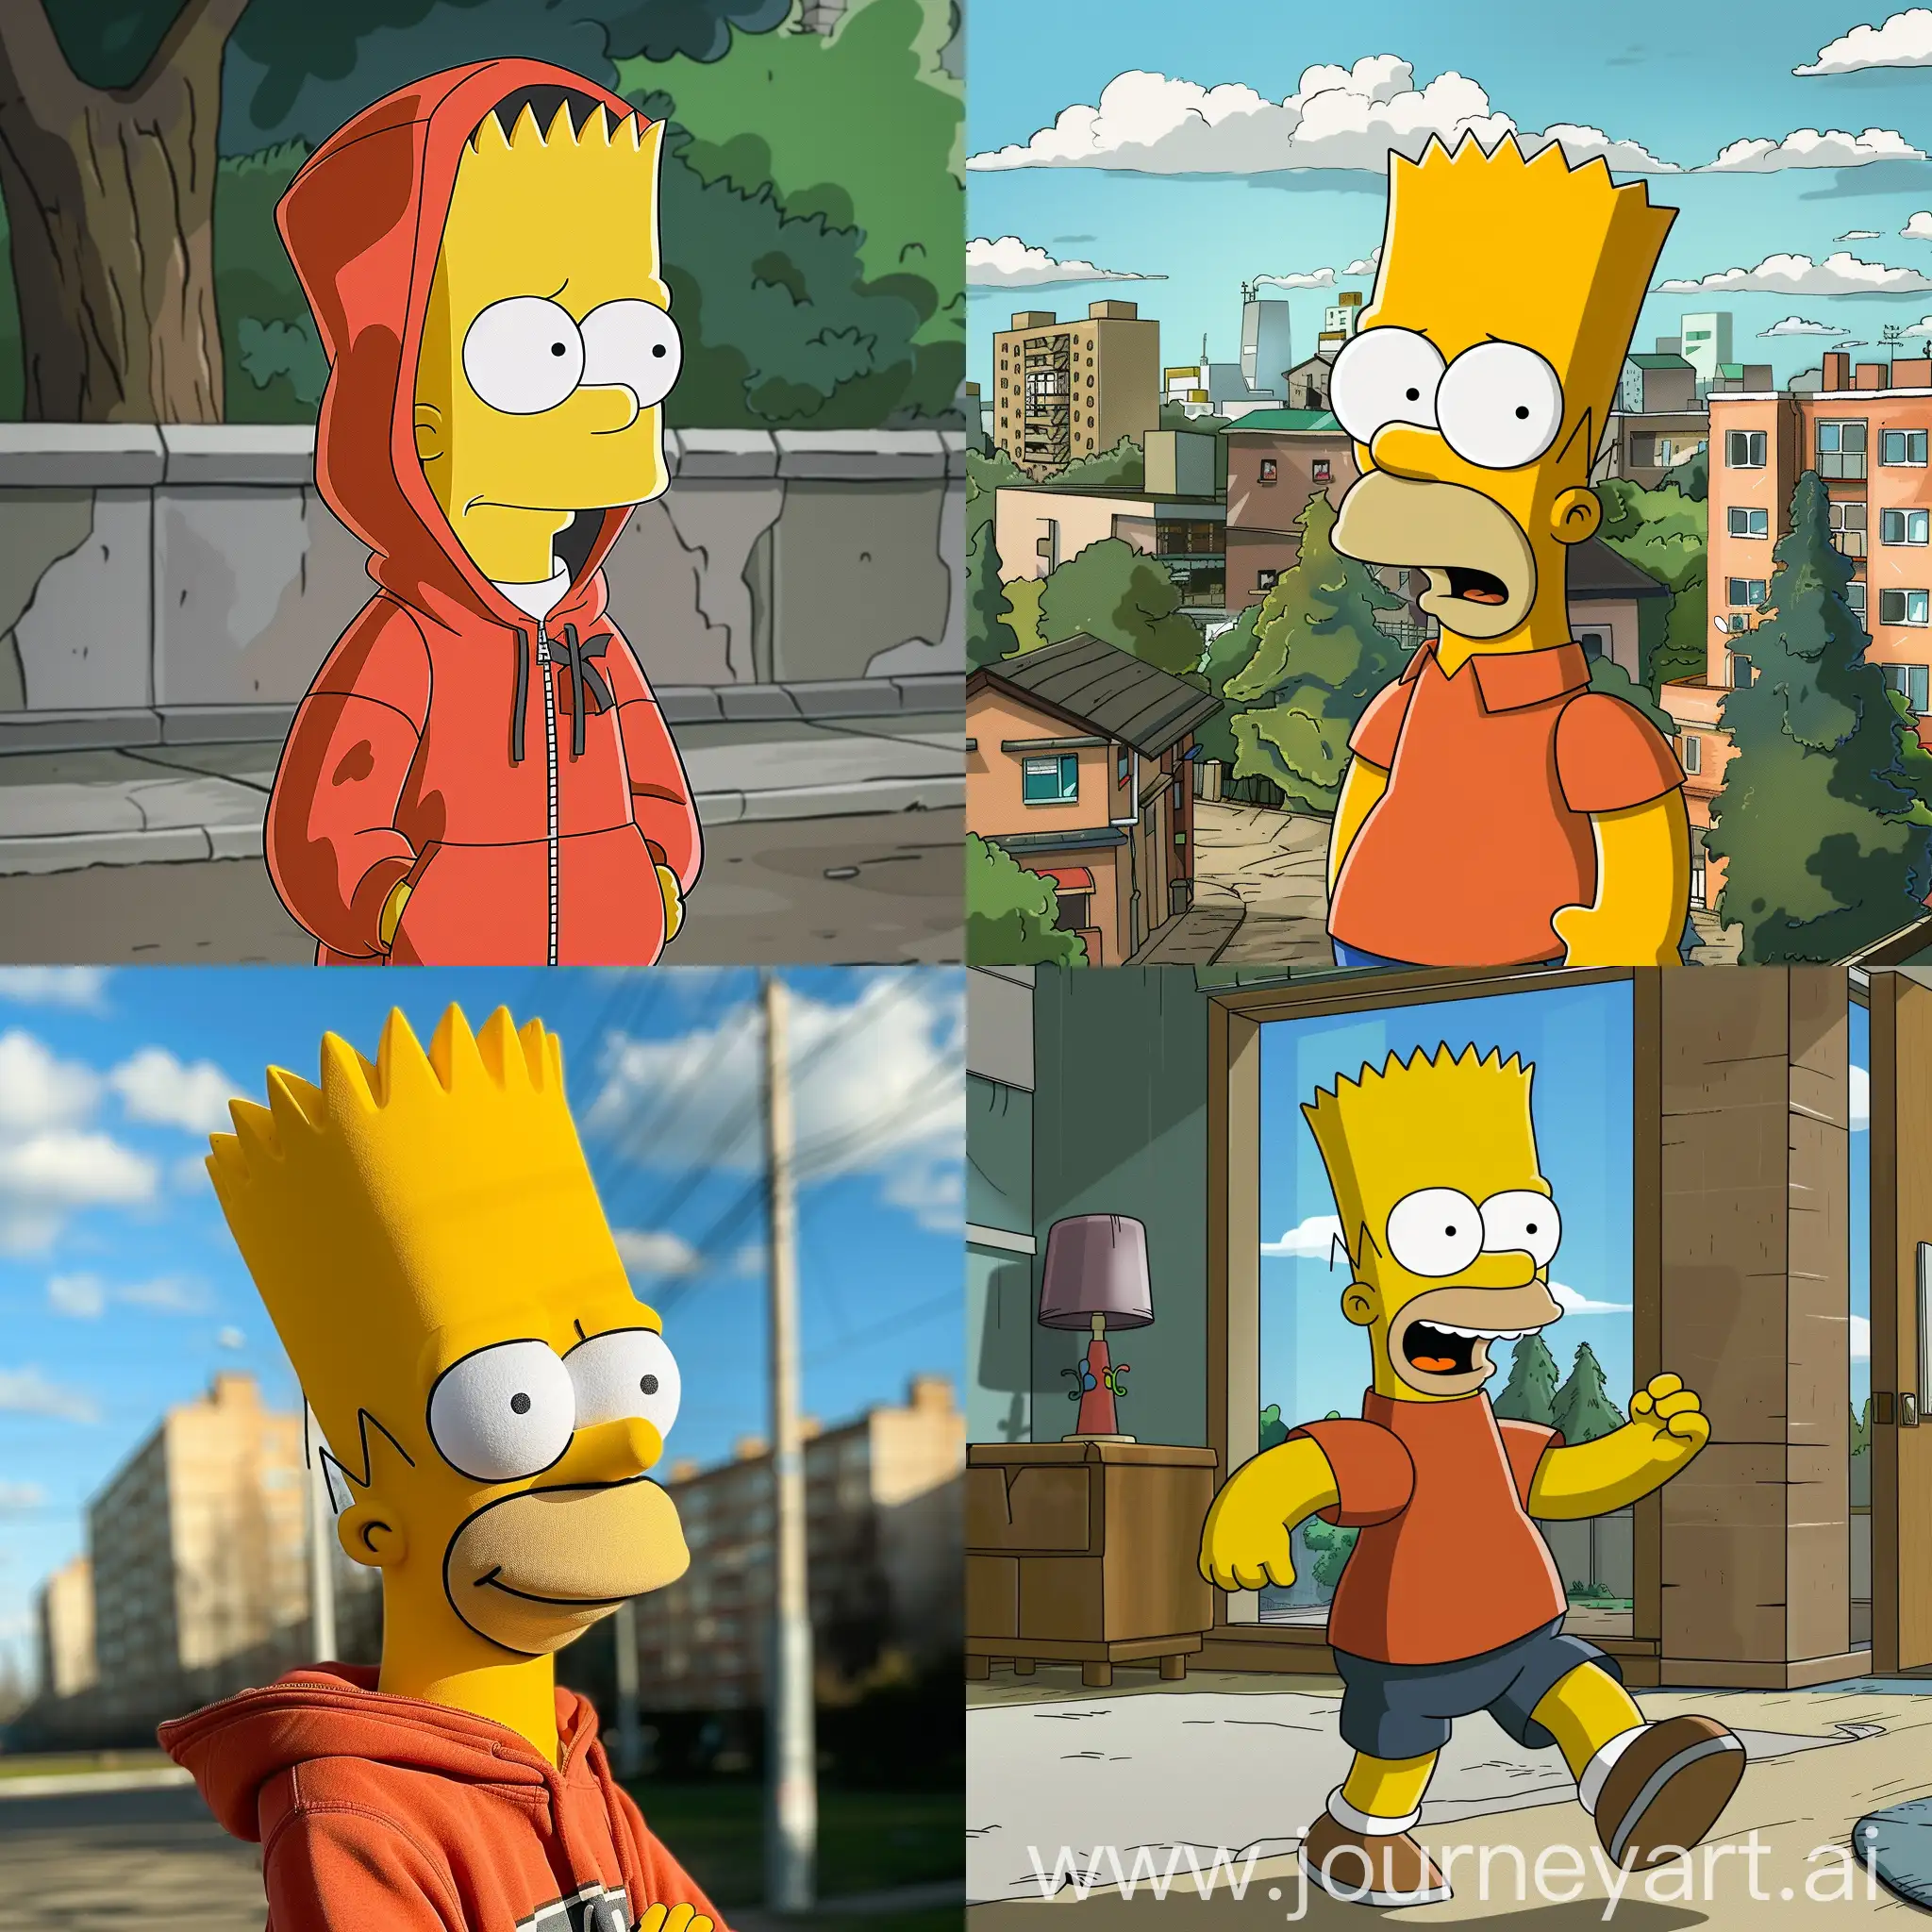 Roman-Gordeev-Cosplaying-as-Bart-Simpson-Portrait